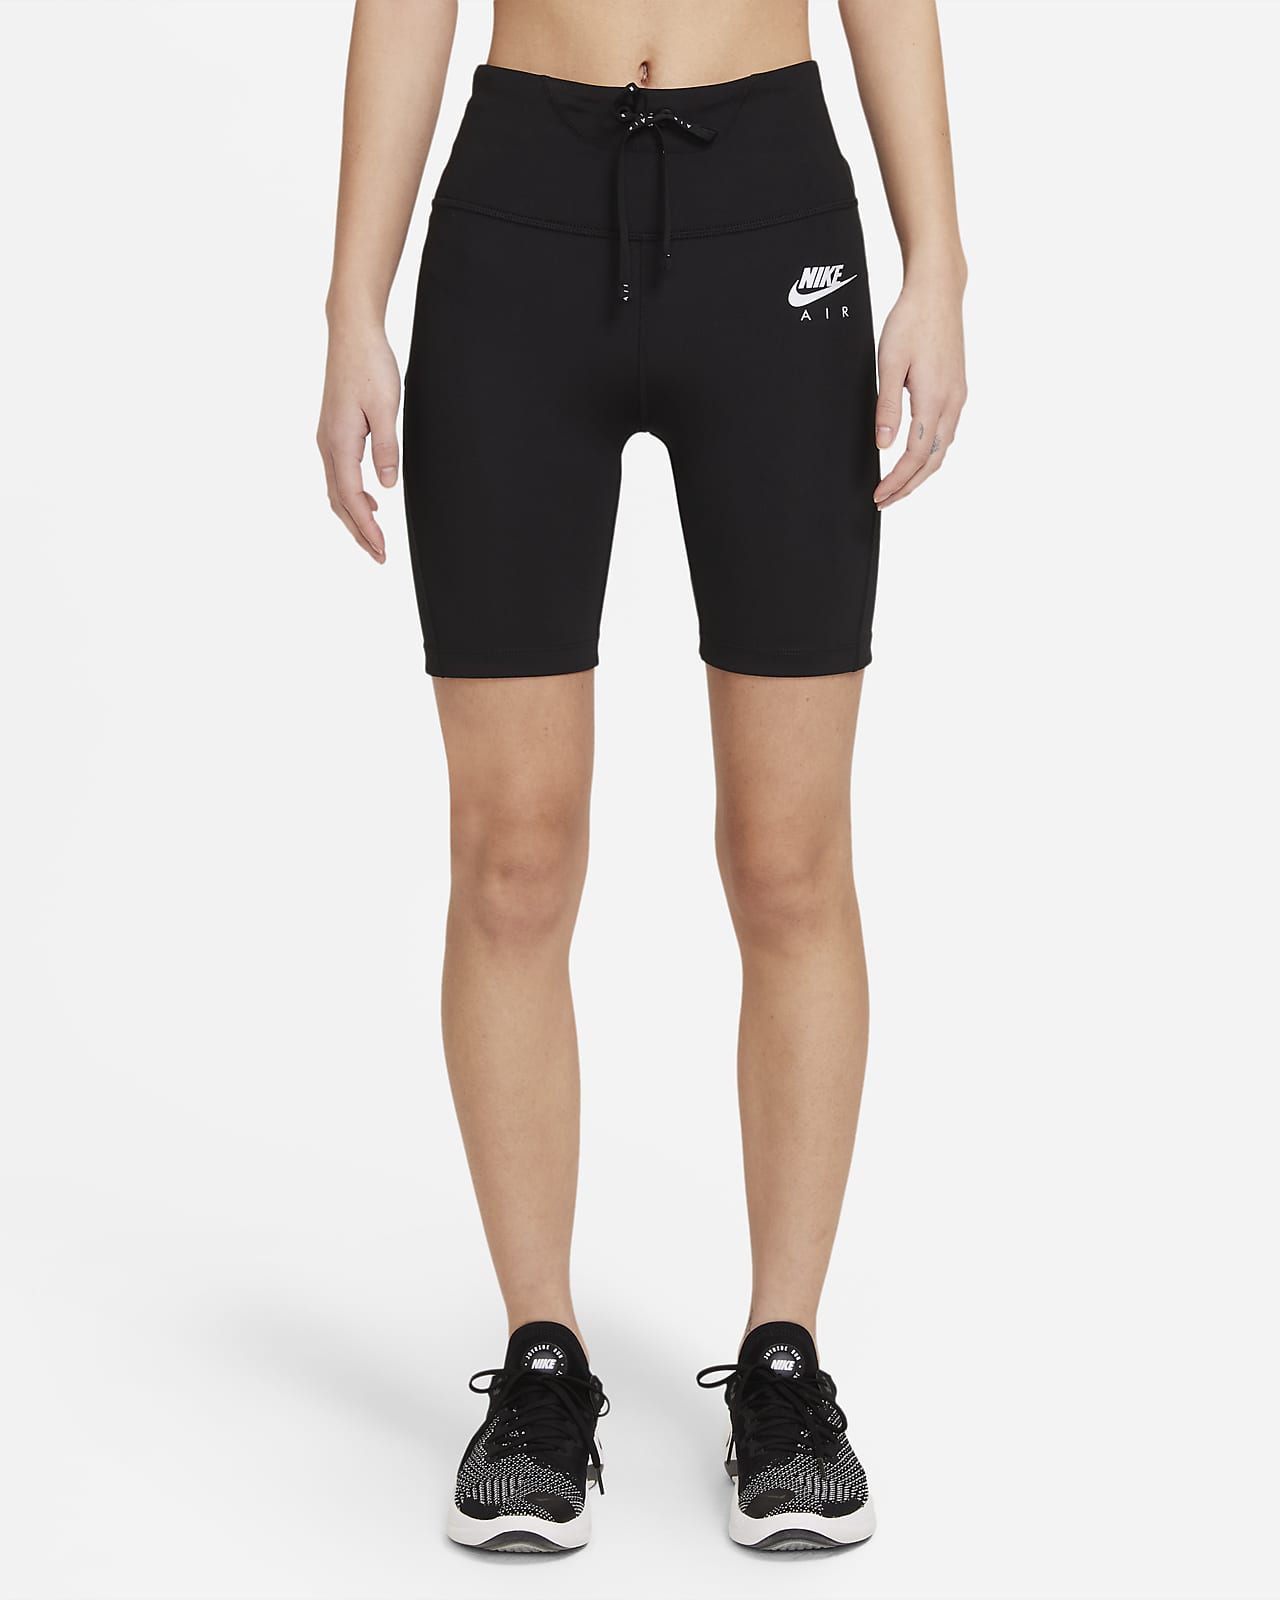 nike air running shorts womens